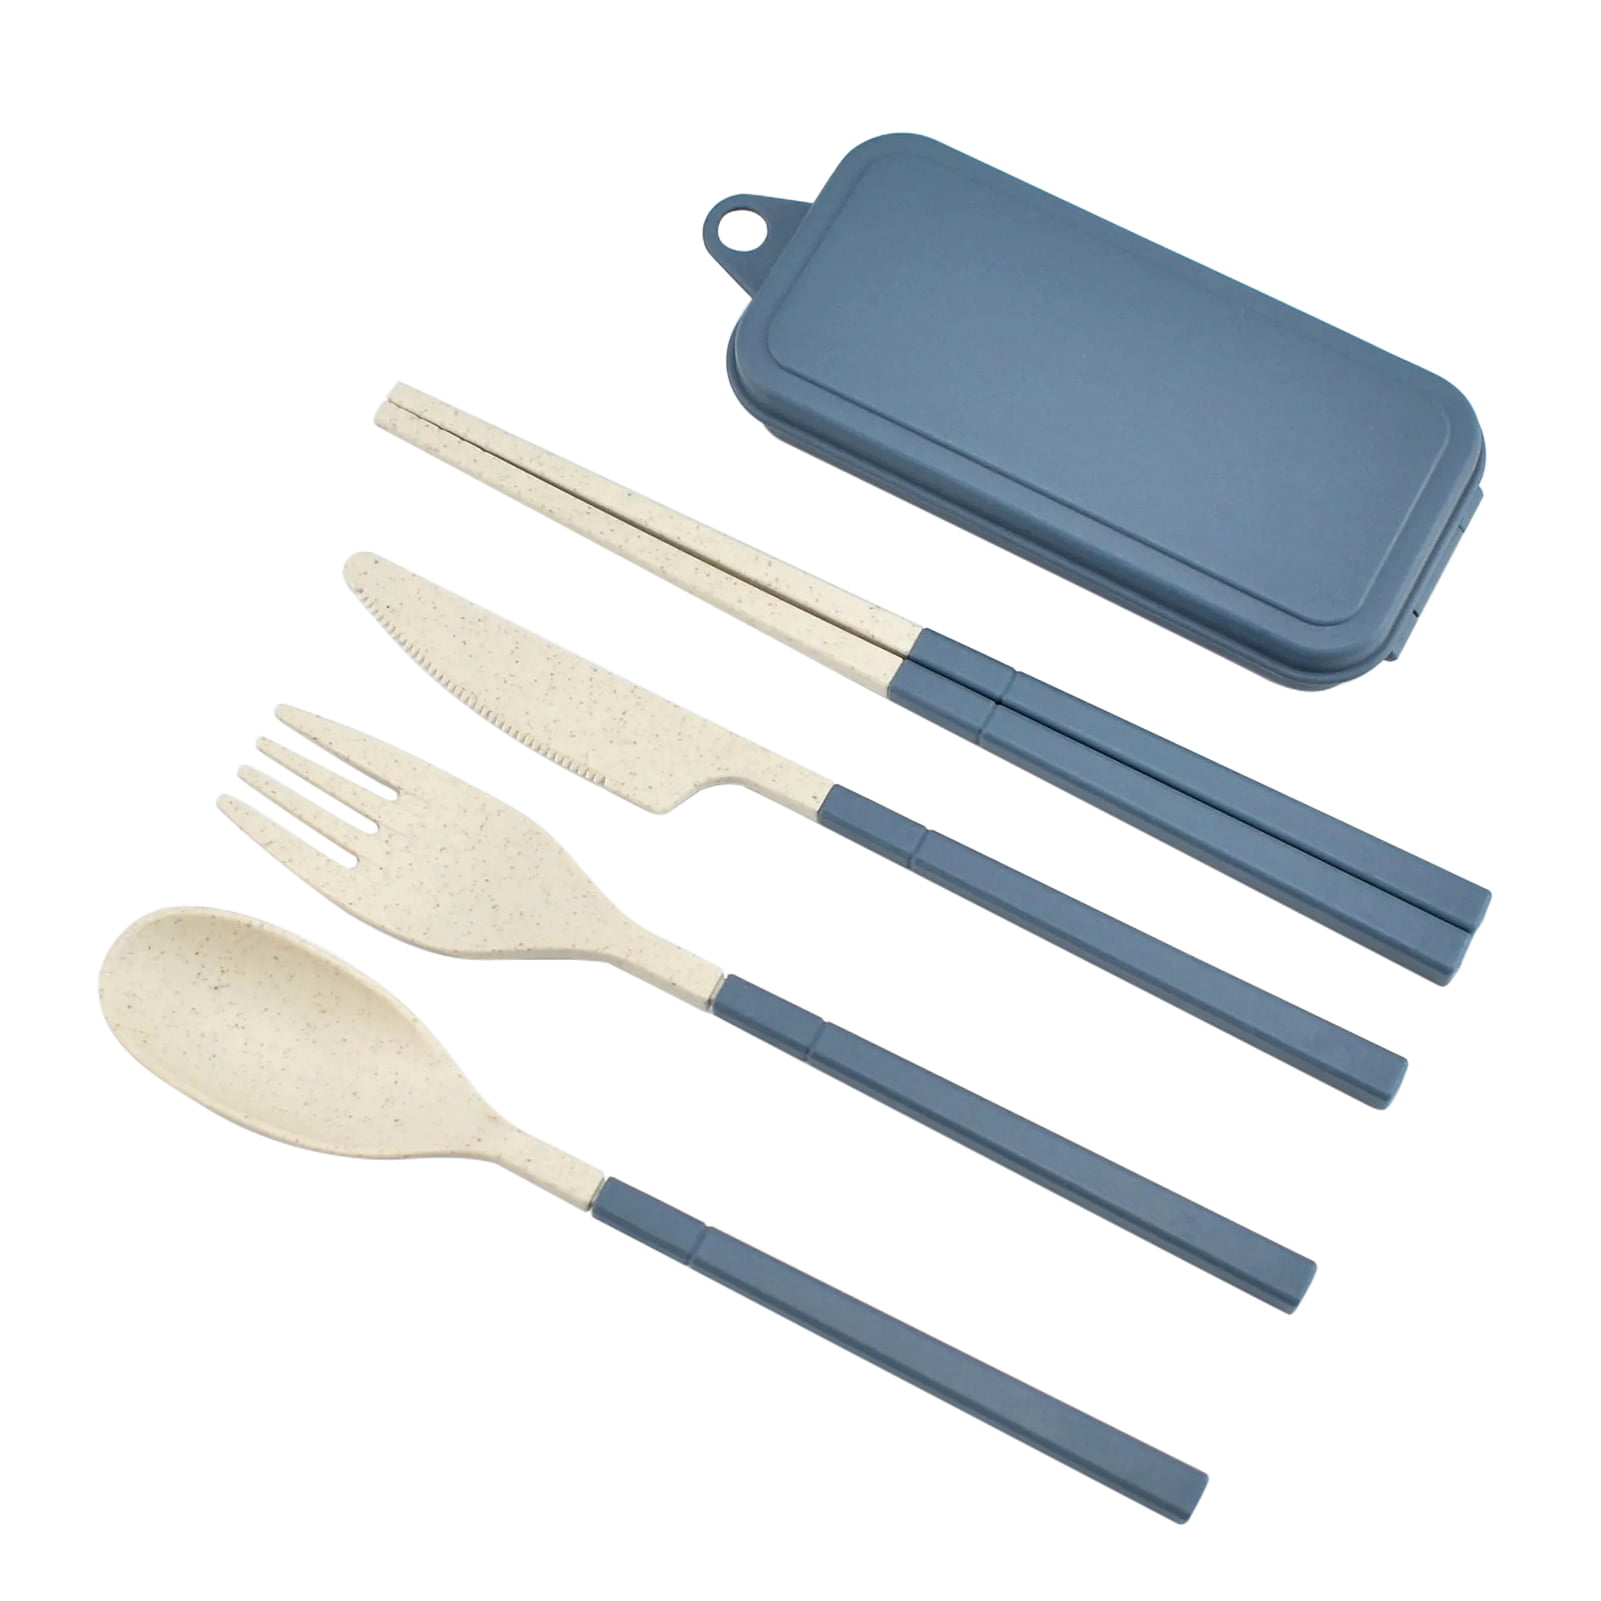 Wheat Straw Chopsticks Dinnerware Kitchen & Dining Utensils For 1/5 Pairs 